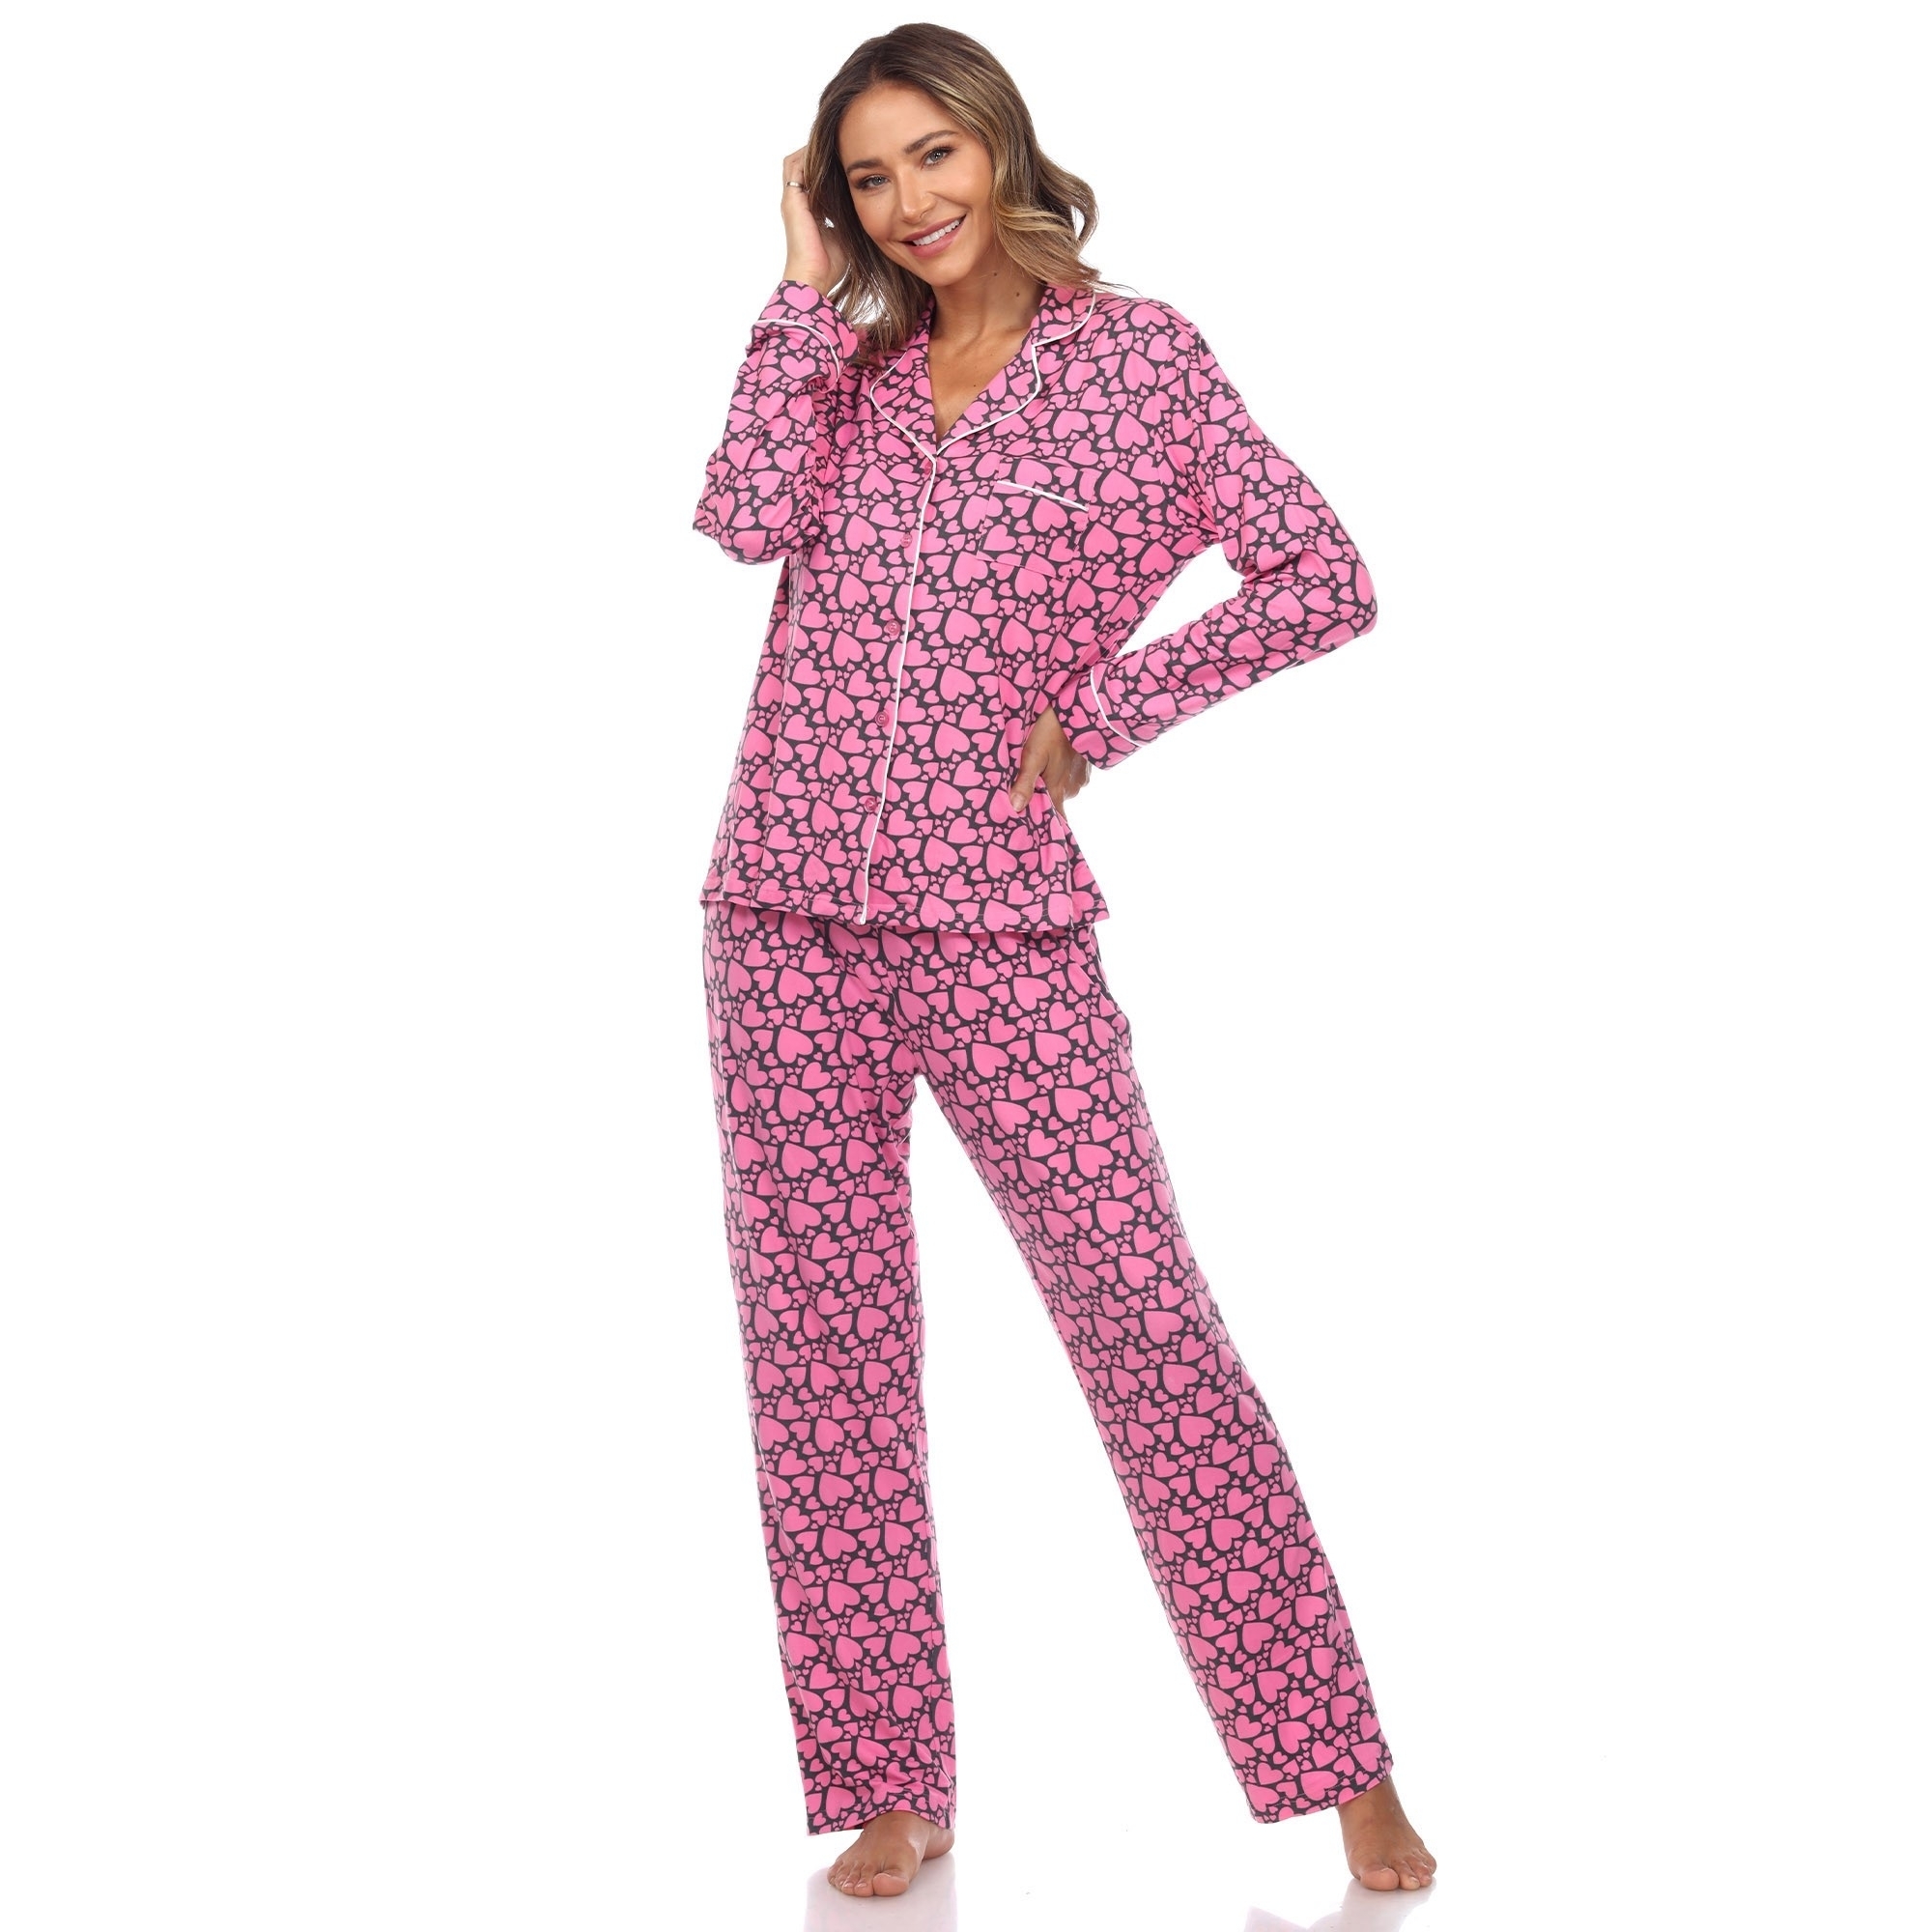 White Mark Women's Long Sleeve Hearts Pajama Set - Pink, 2X